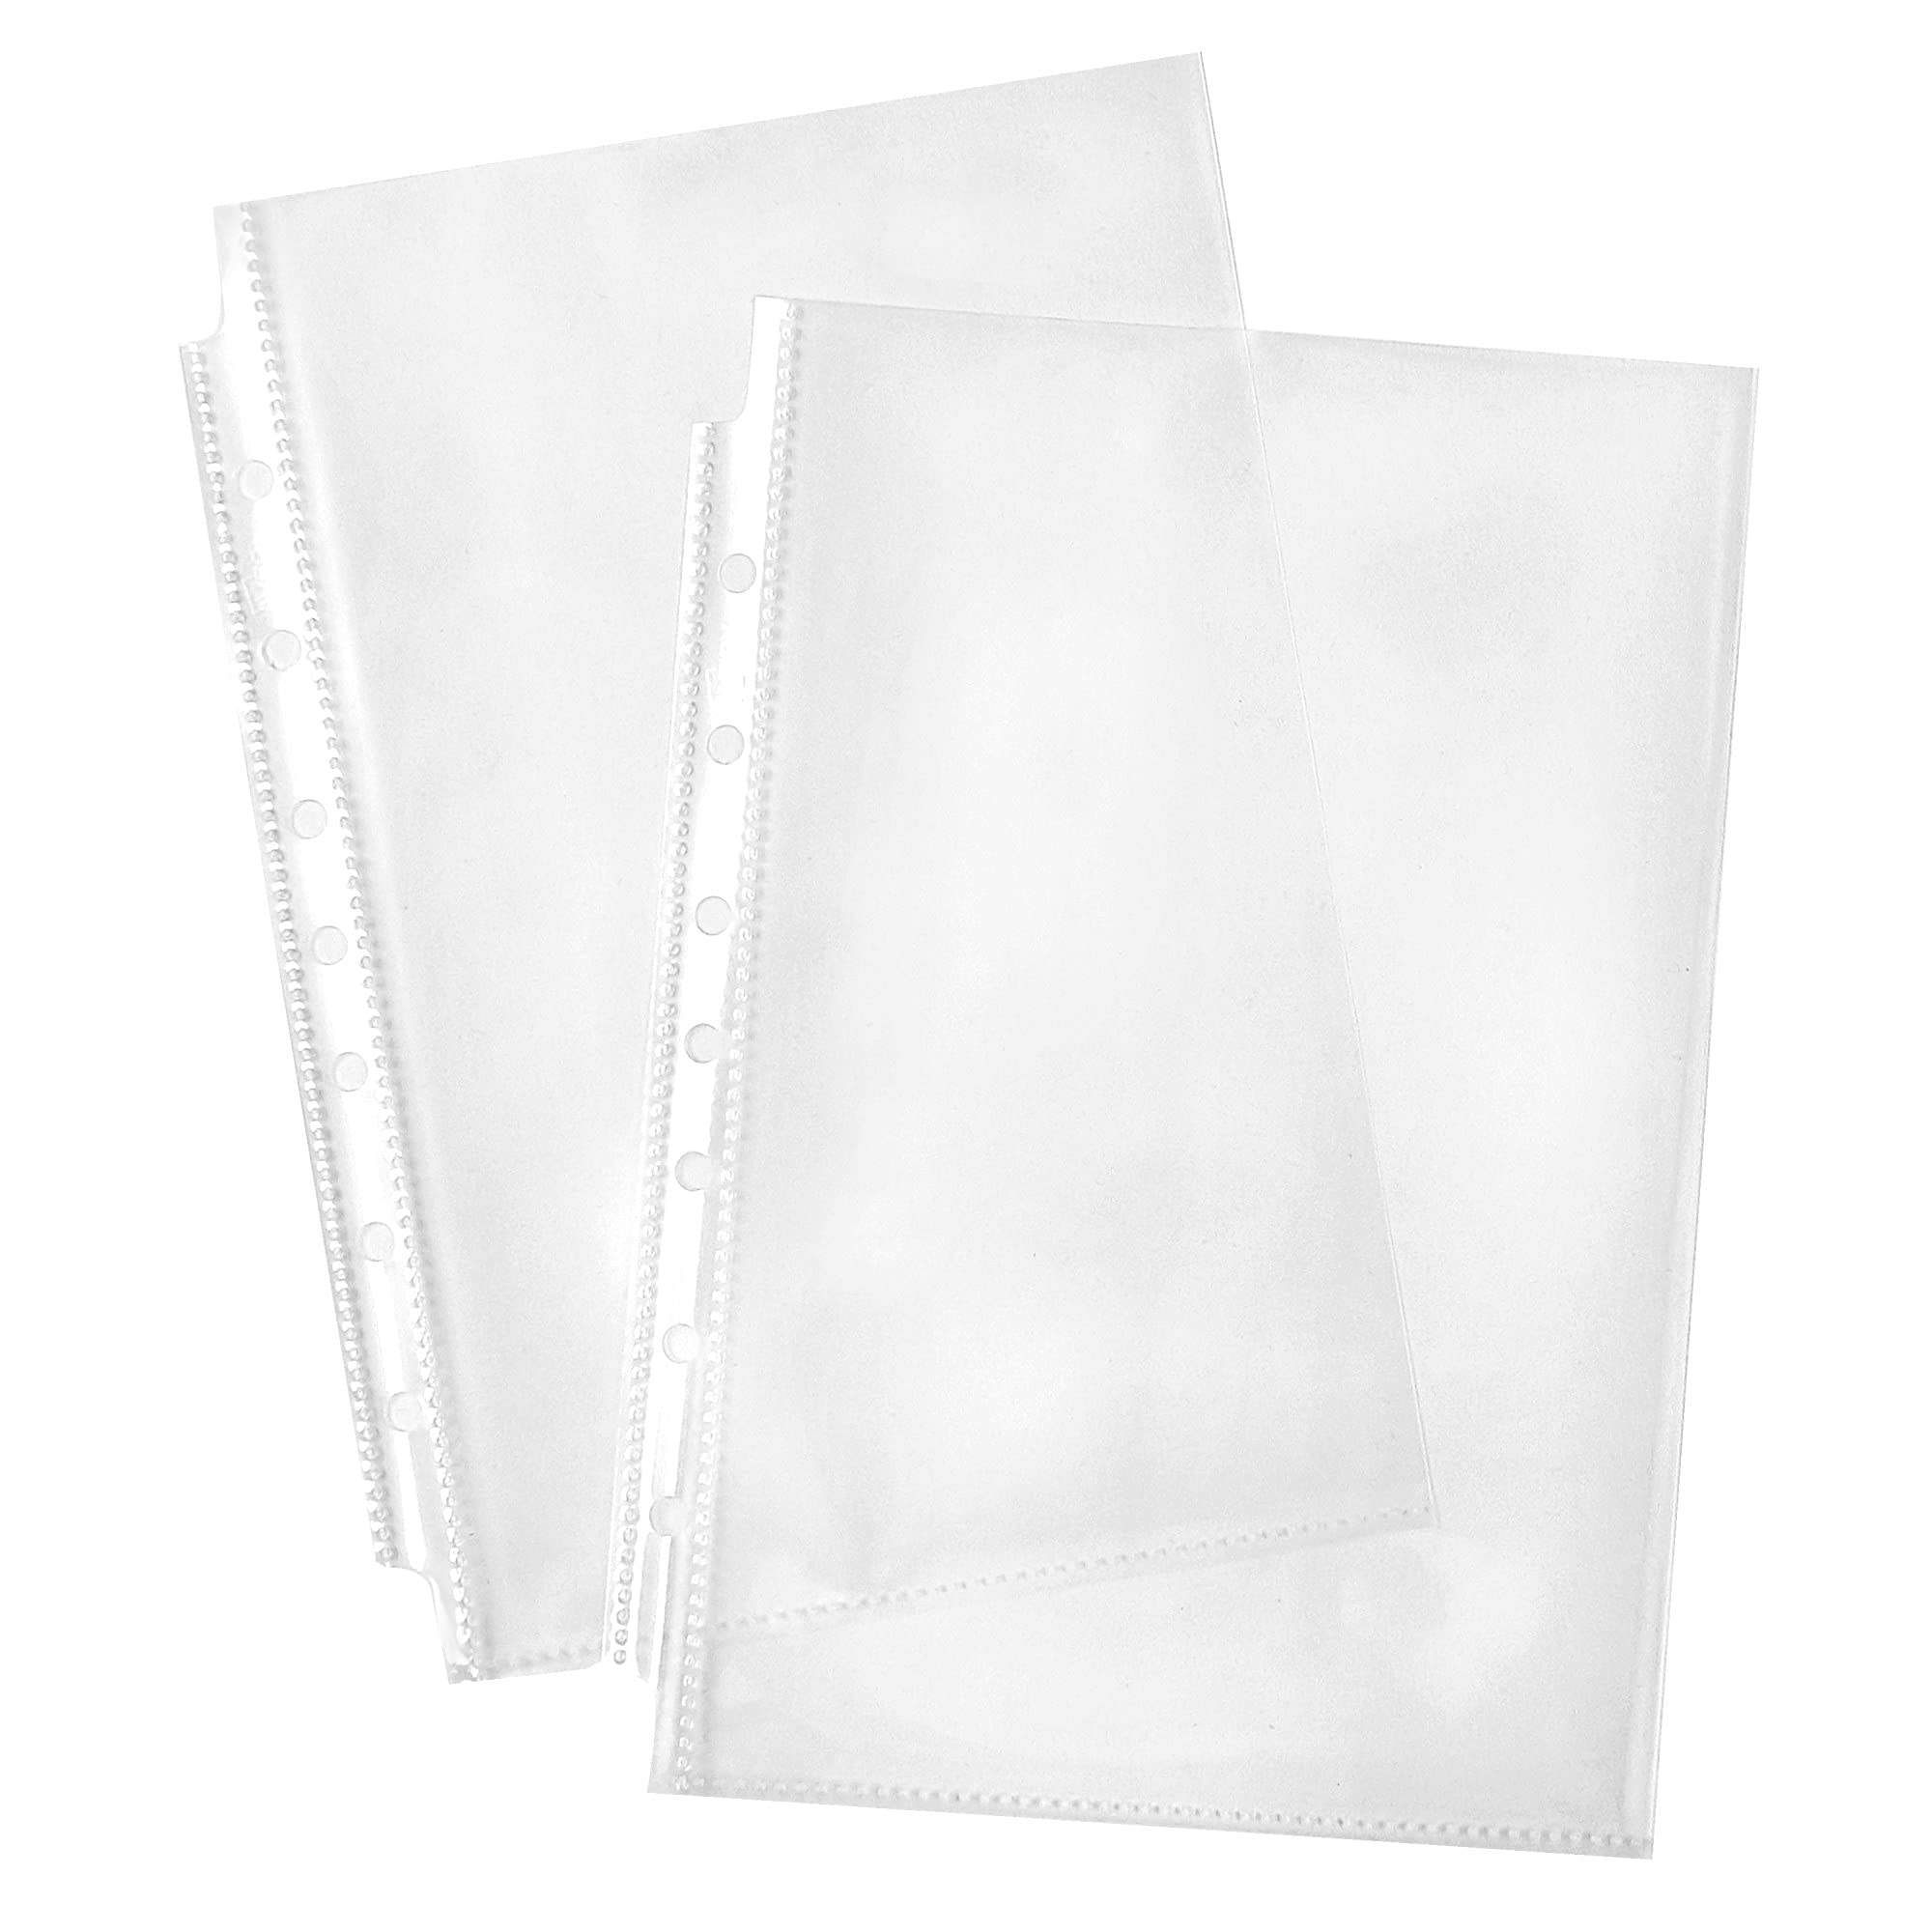 Avery Heavyweight Diamond Clear Sheet Protectors for Mini Binders, 8.5" x 5.5", Acid-Free, 25ct (77004)